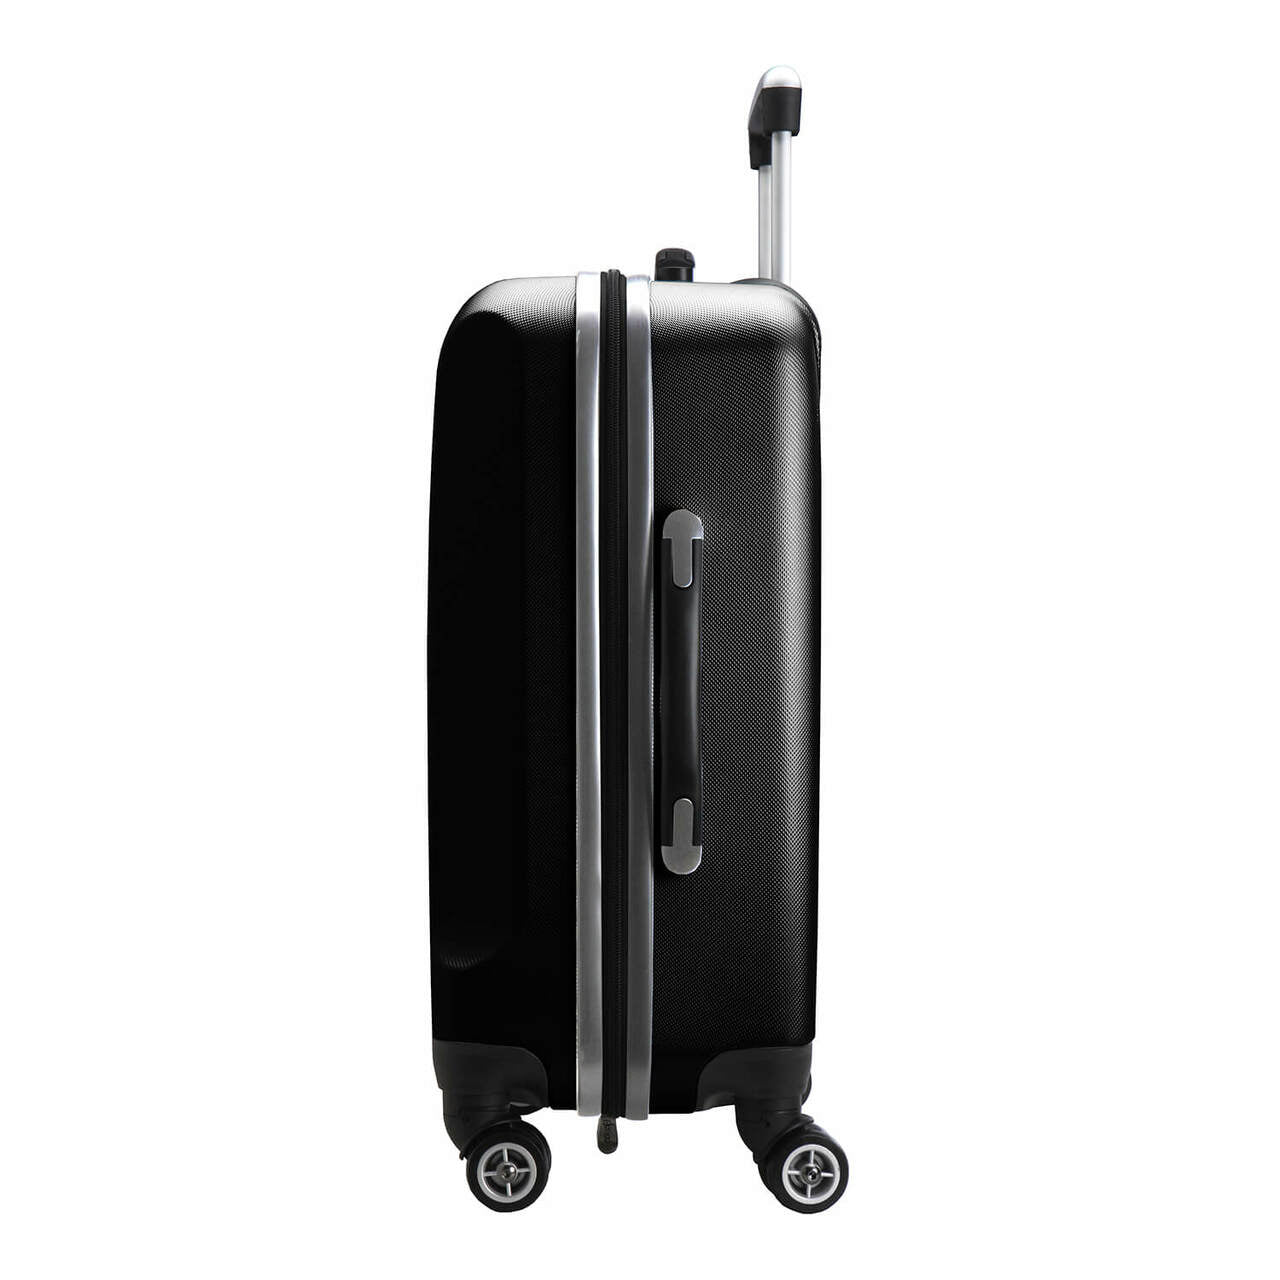 San Antonio Spurs 20" Hardcase Luggage Carry-on Spinner